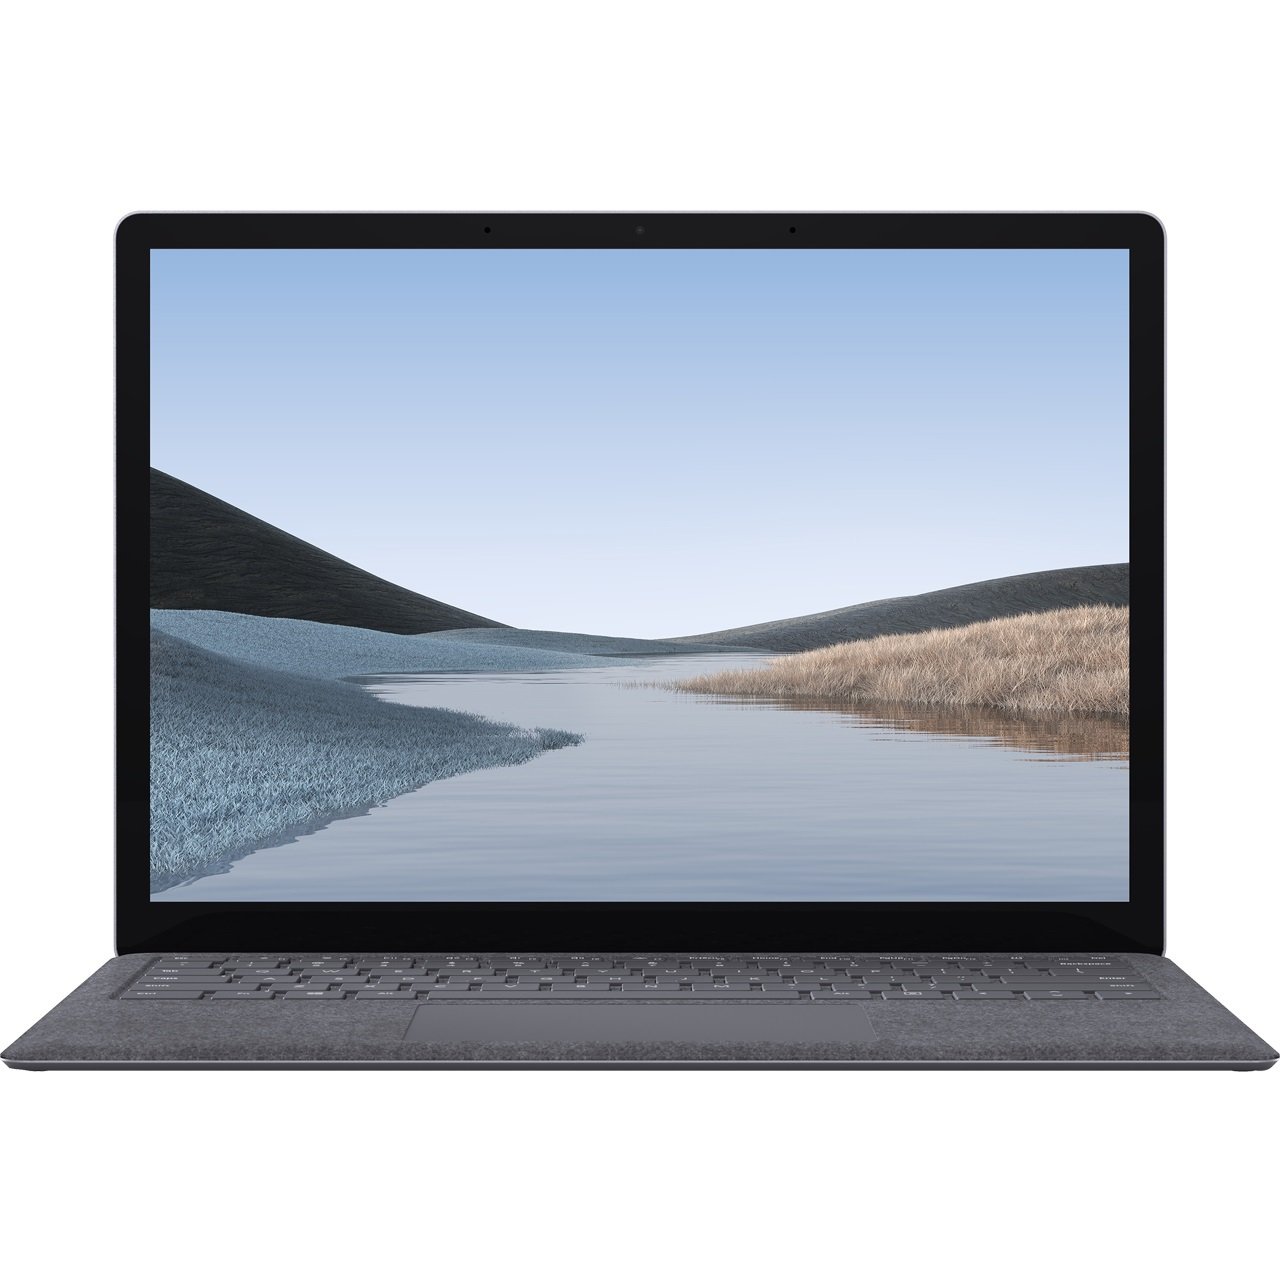 Microsoft Surface Laptop 3 13.5in i5 8GB 256GB - Platinum